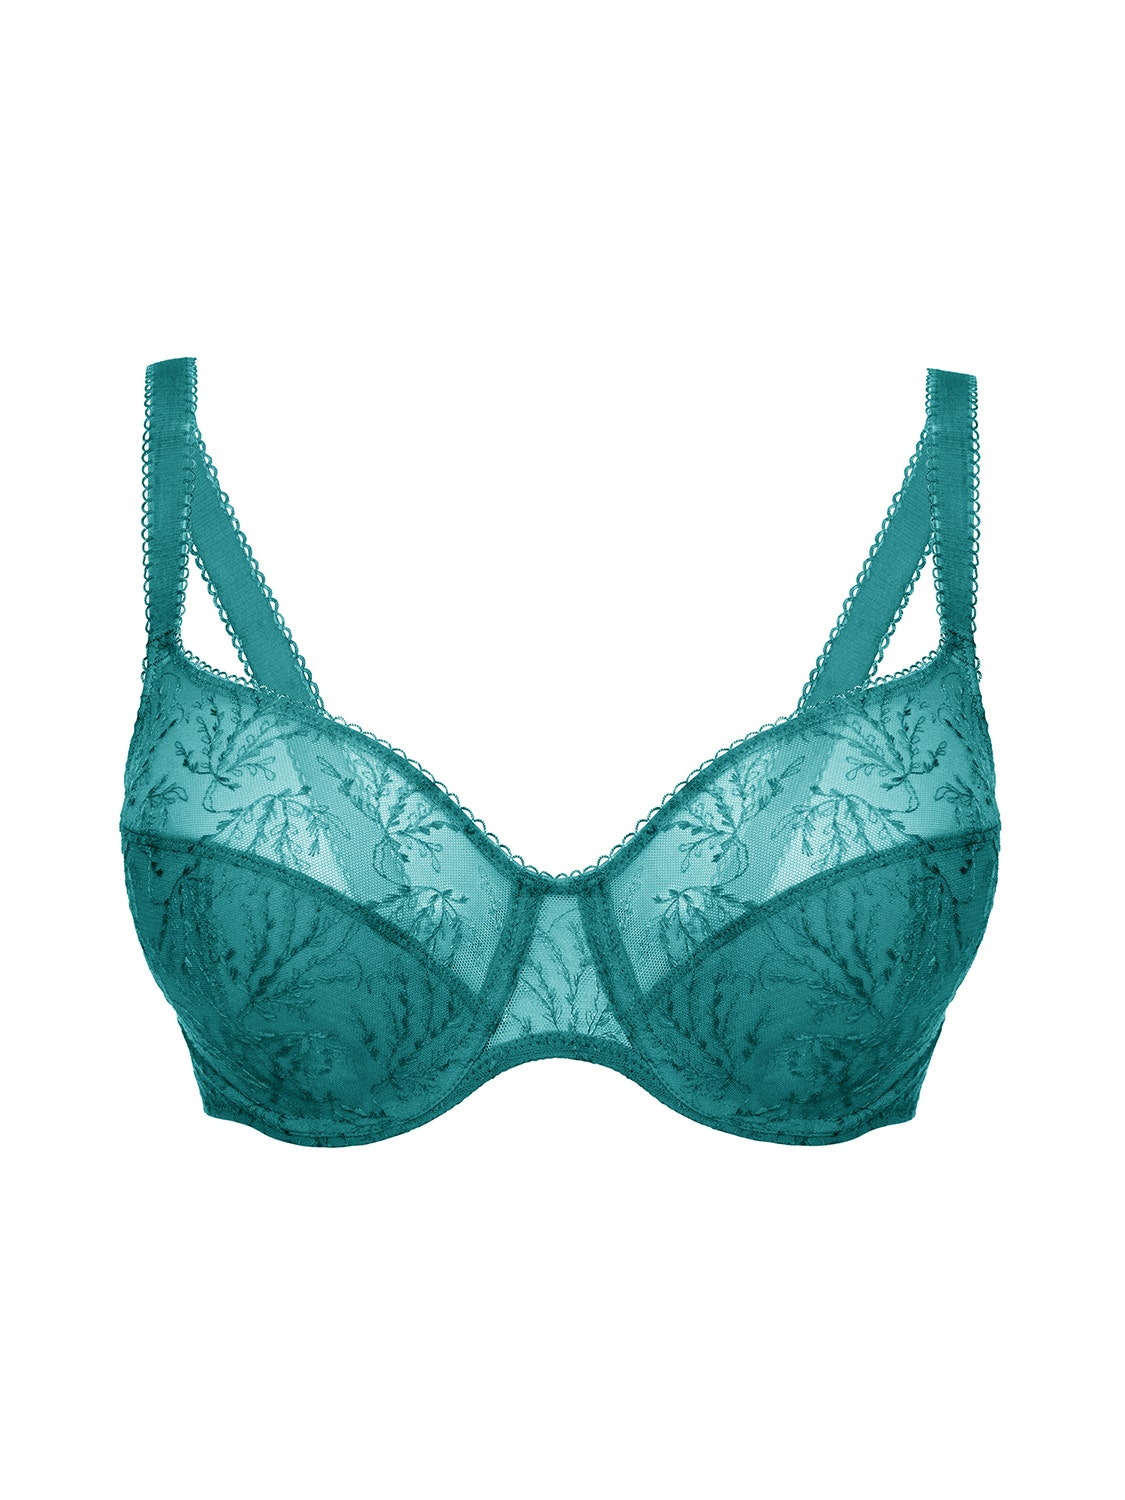 full-cup-support-bra-emerald-green-opaline-40